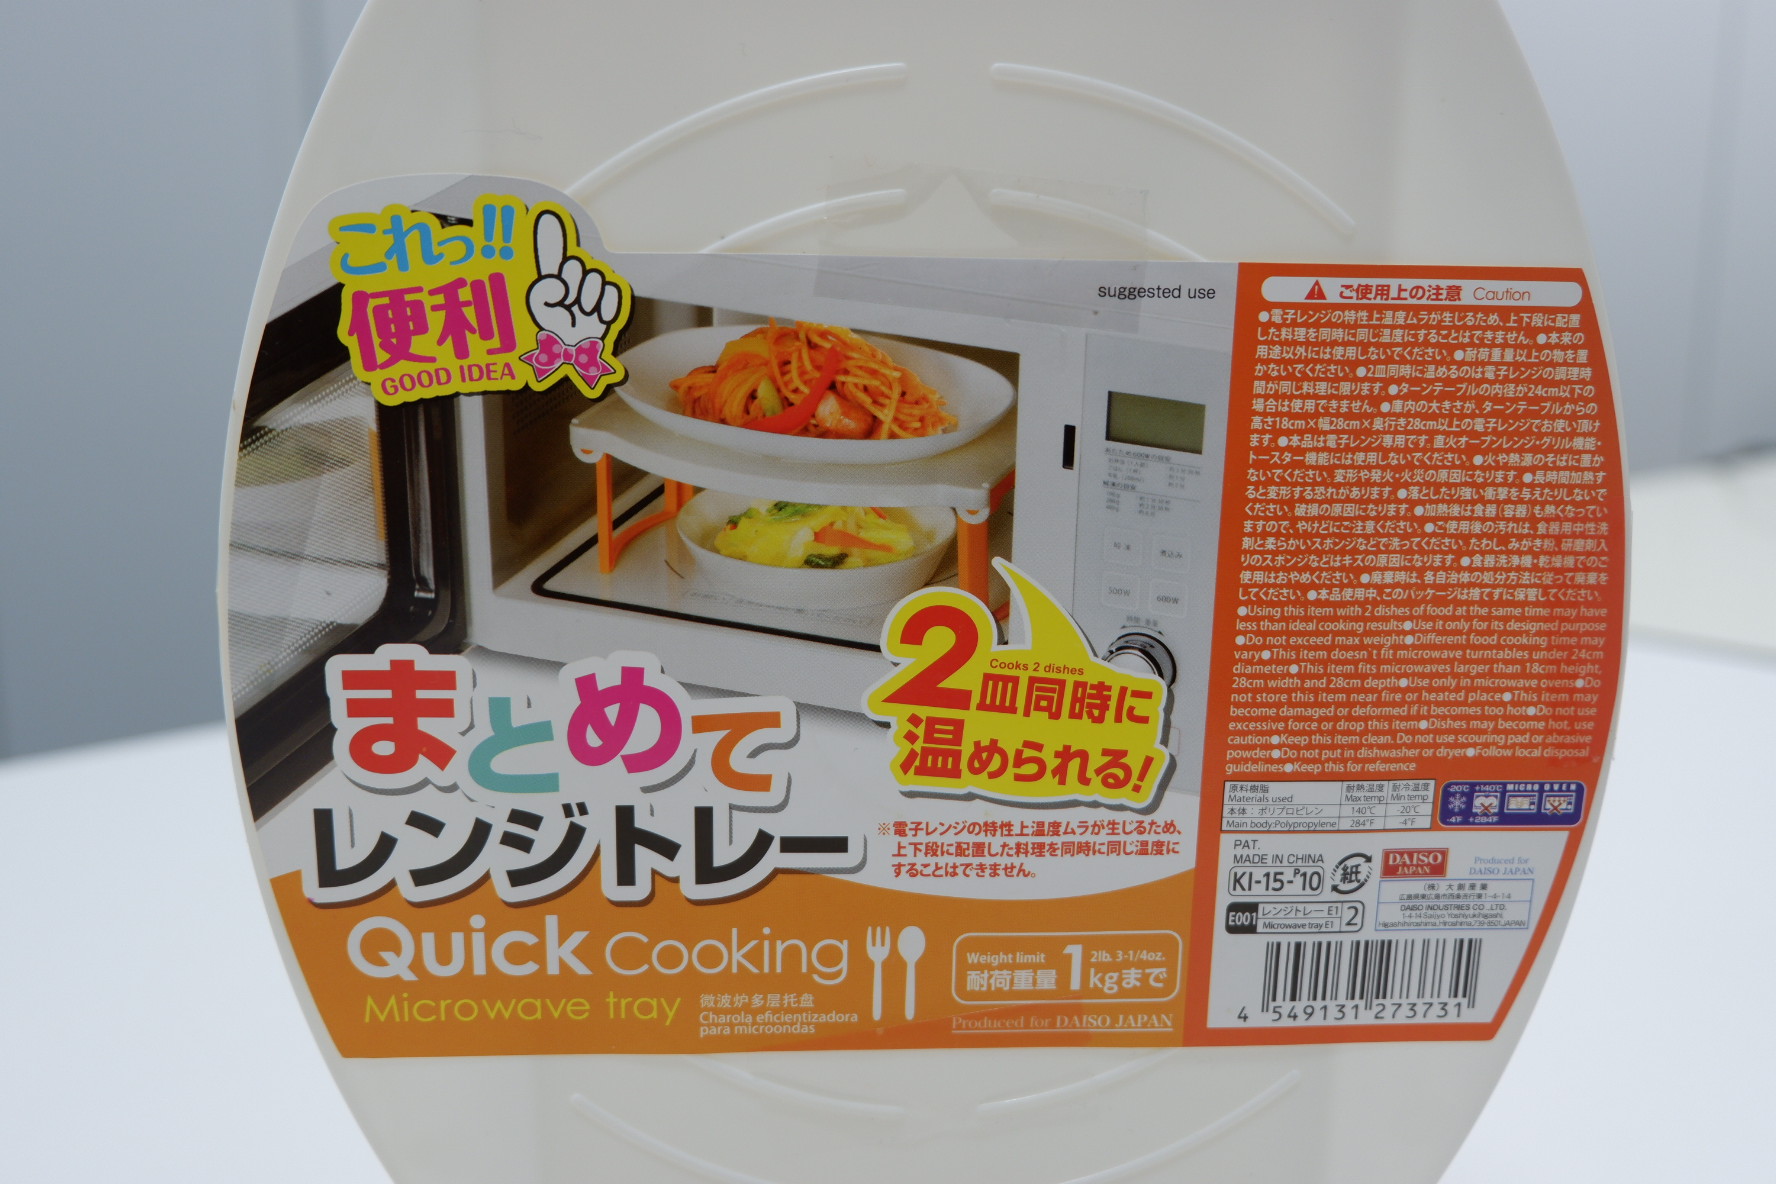 Produk Daiso di Jepang untuk membantu masak dengan microwave. 